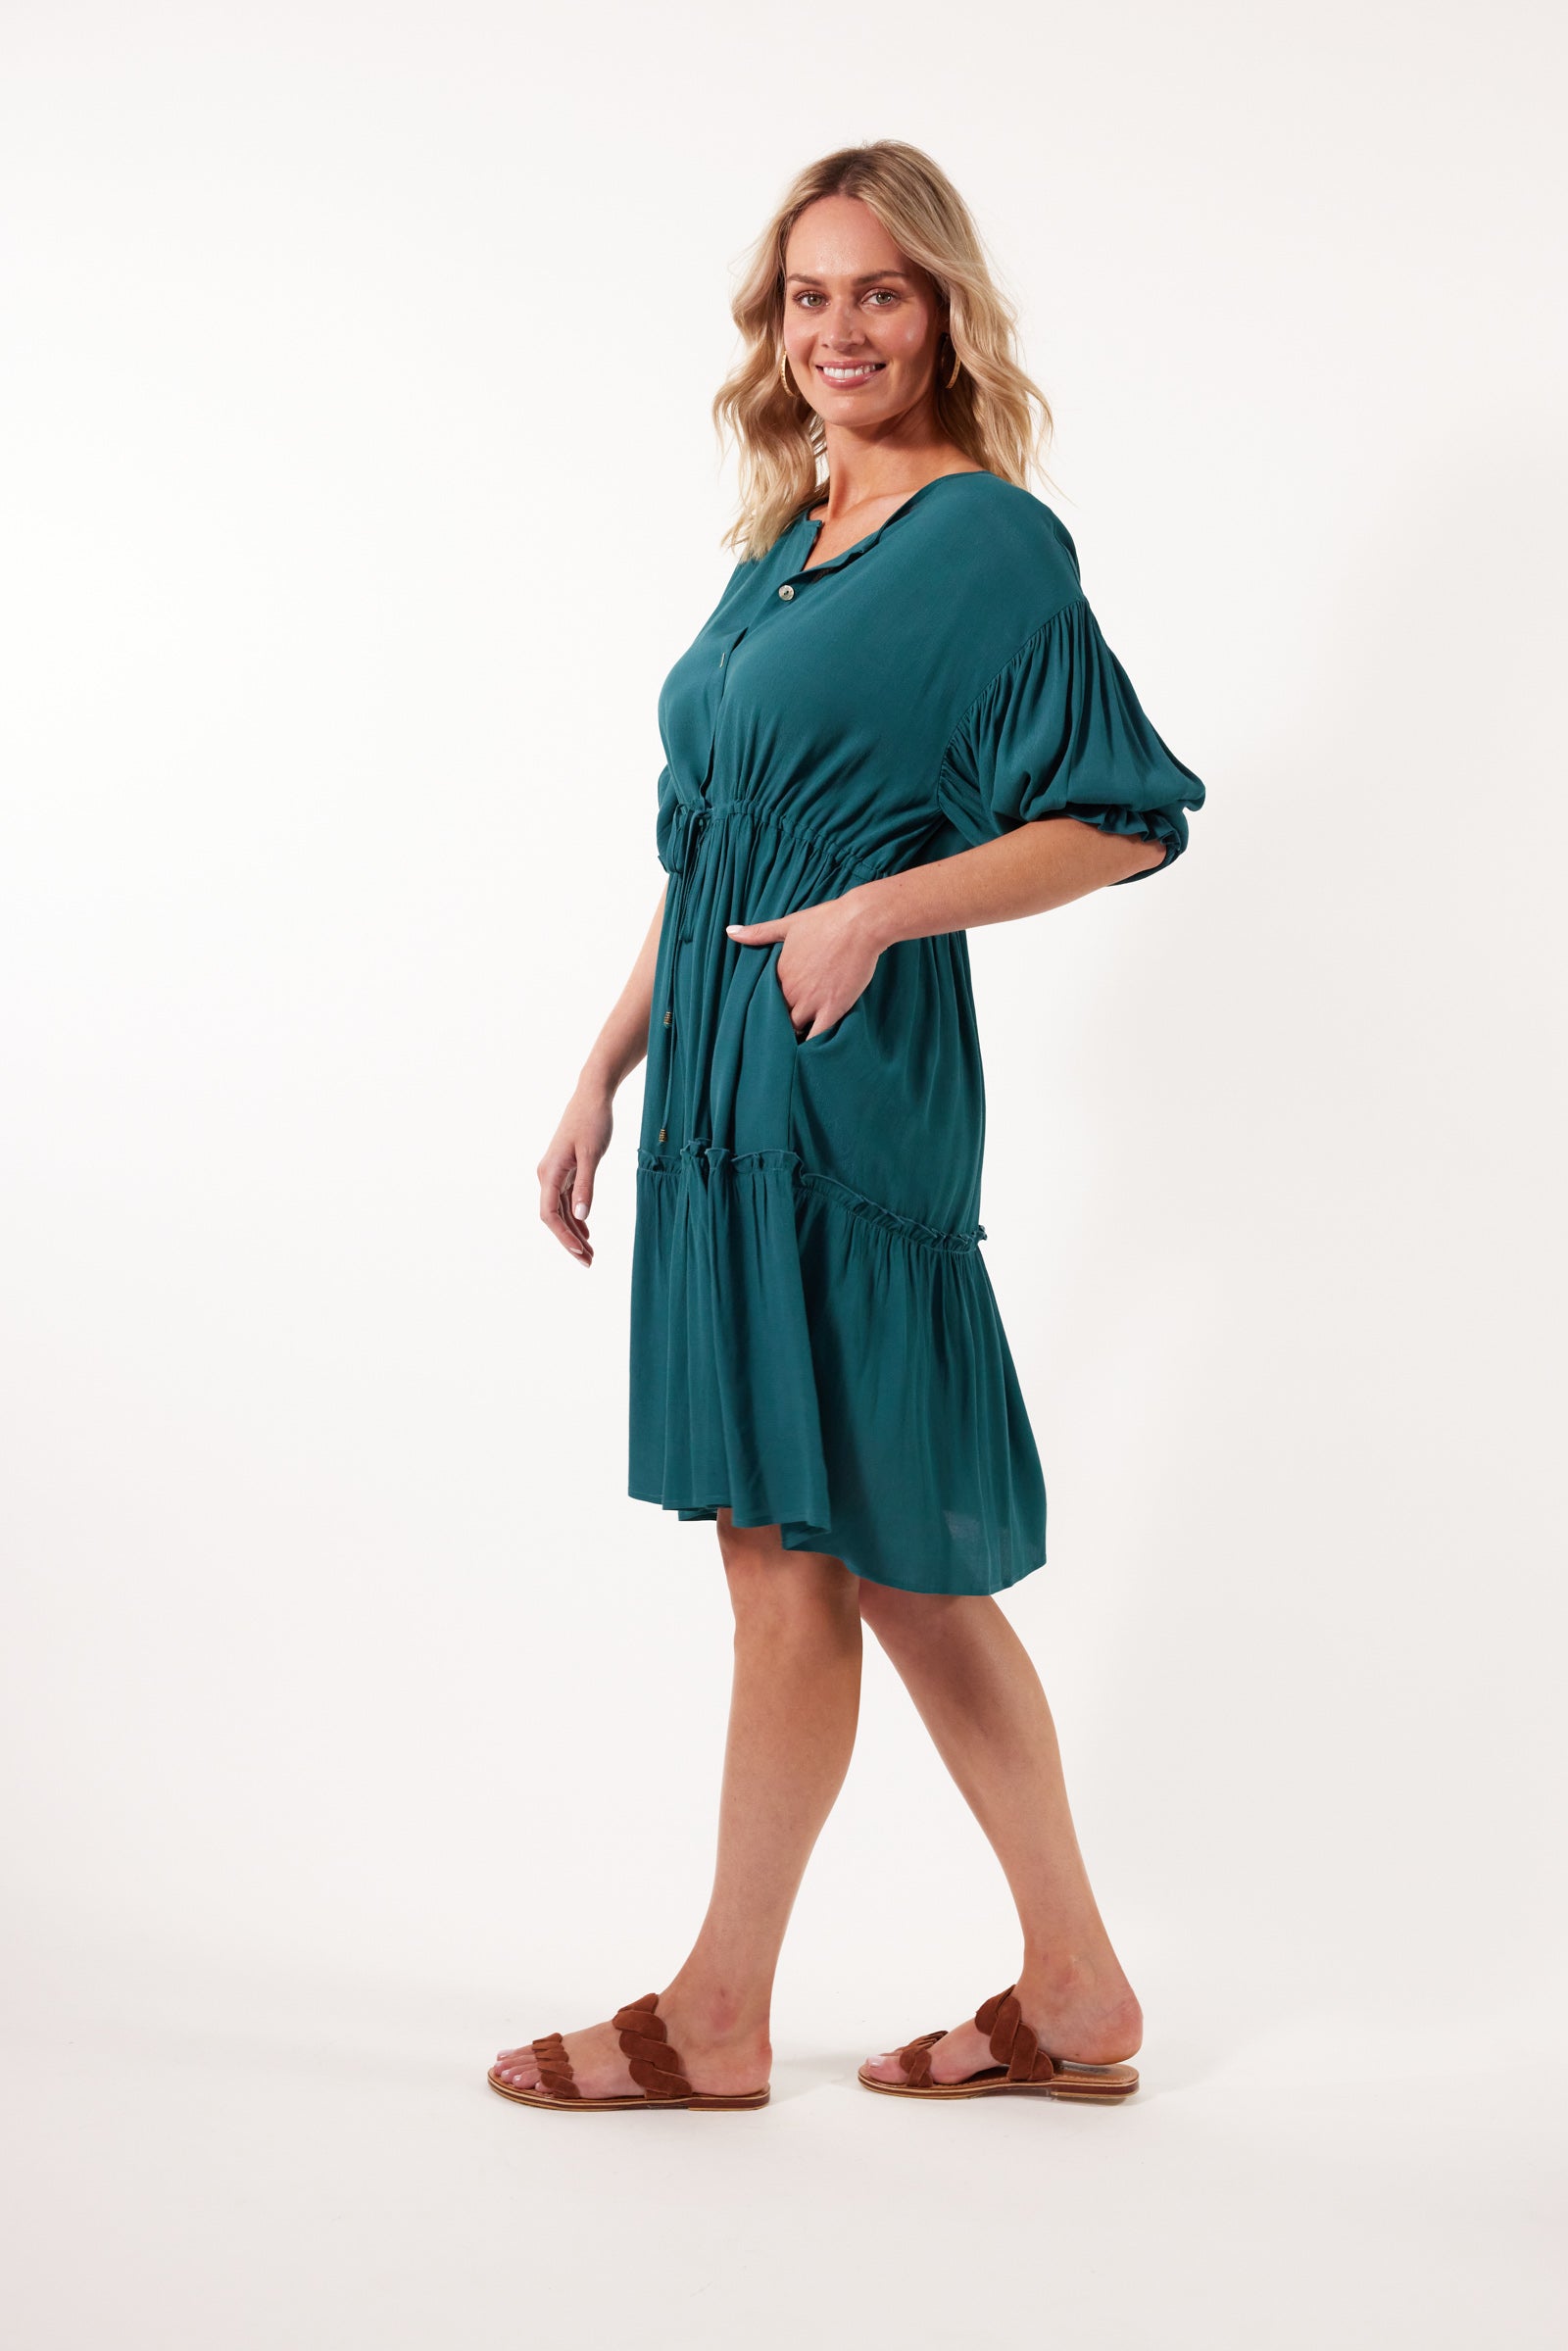 Botanical Tie Dress - Teal - Isle of Mine Clothing - Dress Mid One Size